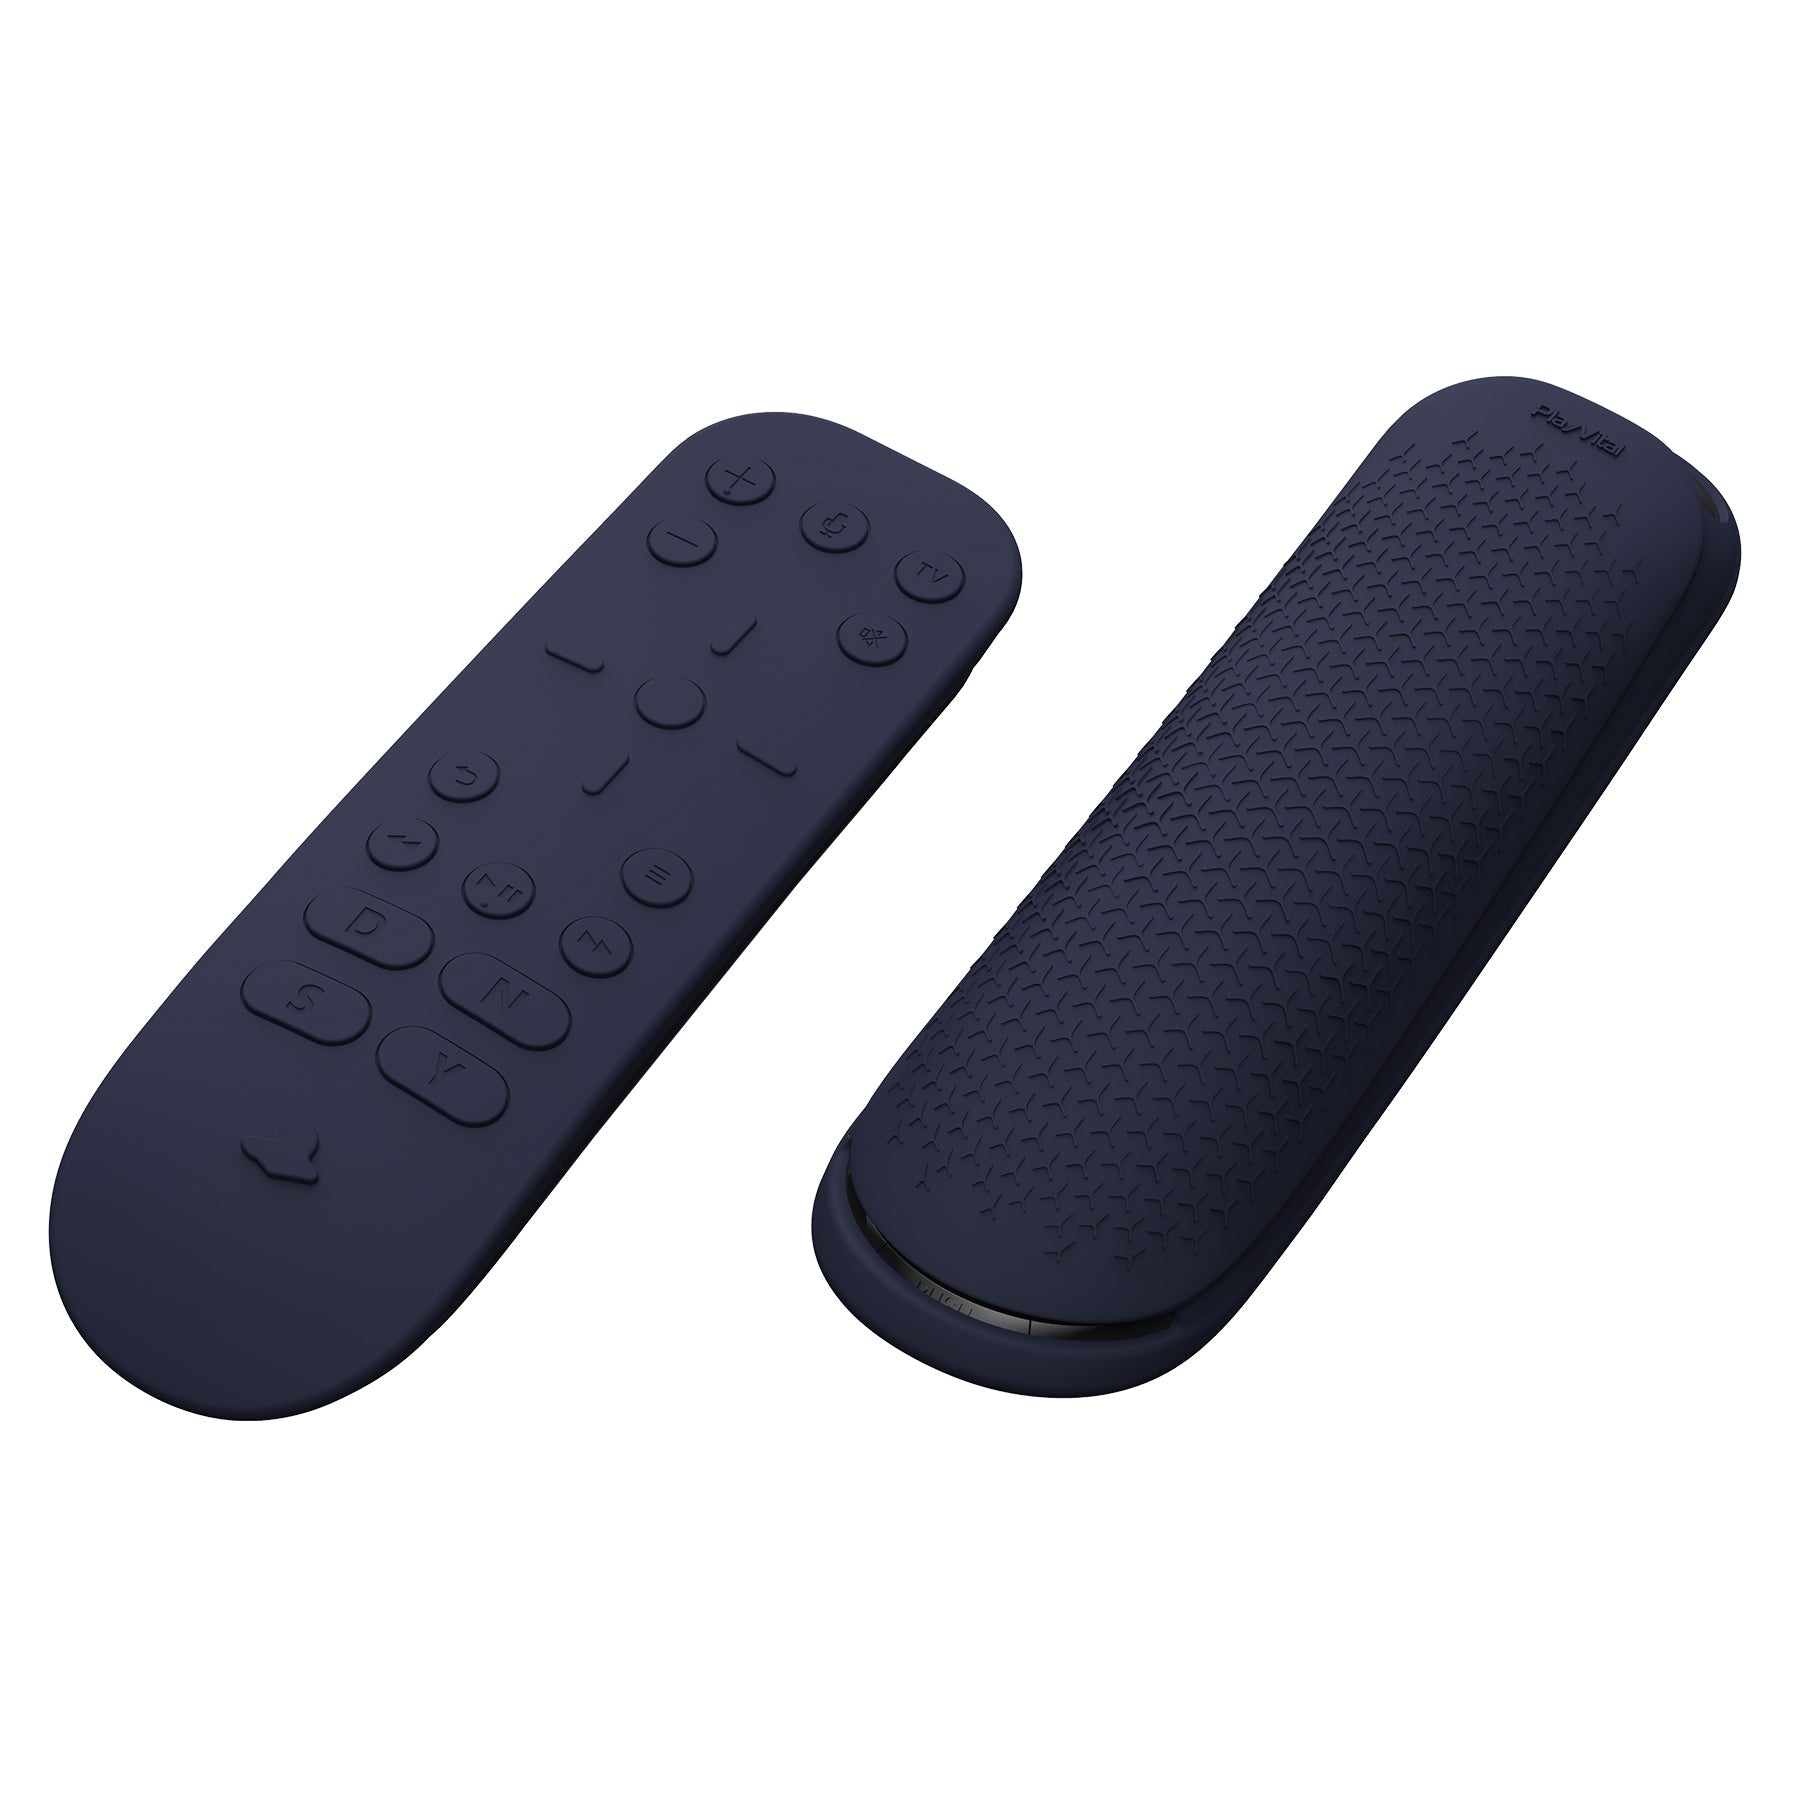 PlayVital Midnight Blue Silicone Protective Remote Case for PS5 Media Remote Cover, Ergonomic Design Full Body Protector Skin for PS5 Remote Control - PFPJ038 PlayVital